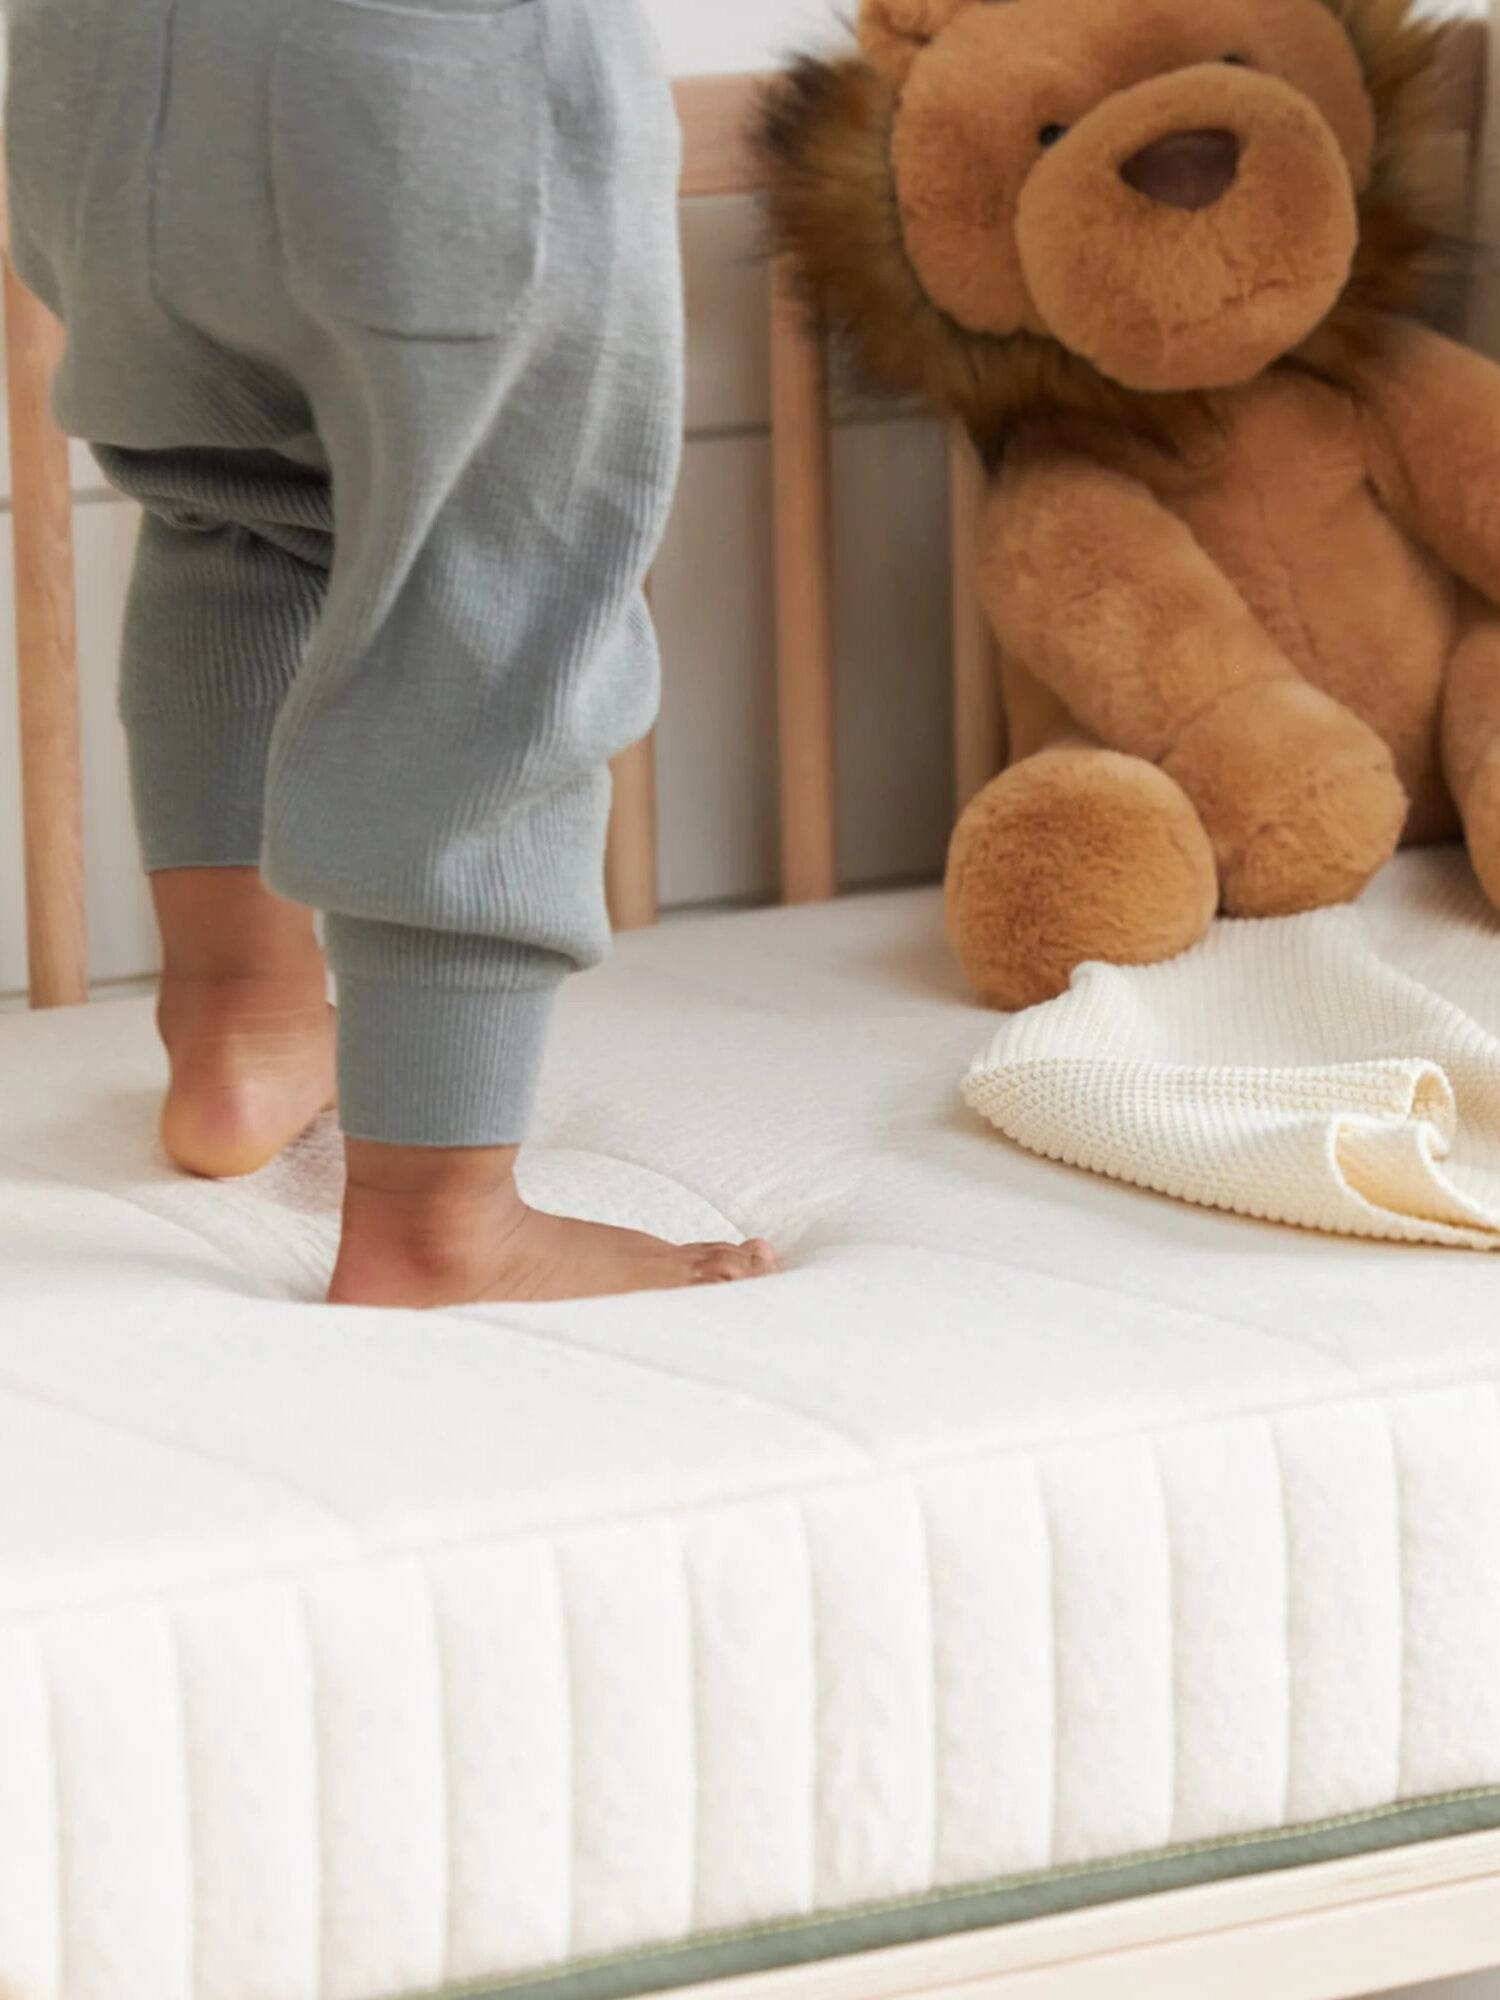 A child's feet stand on an Avocado crib mattress